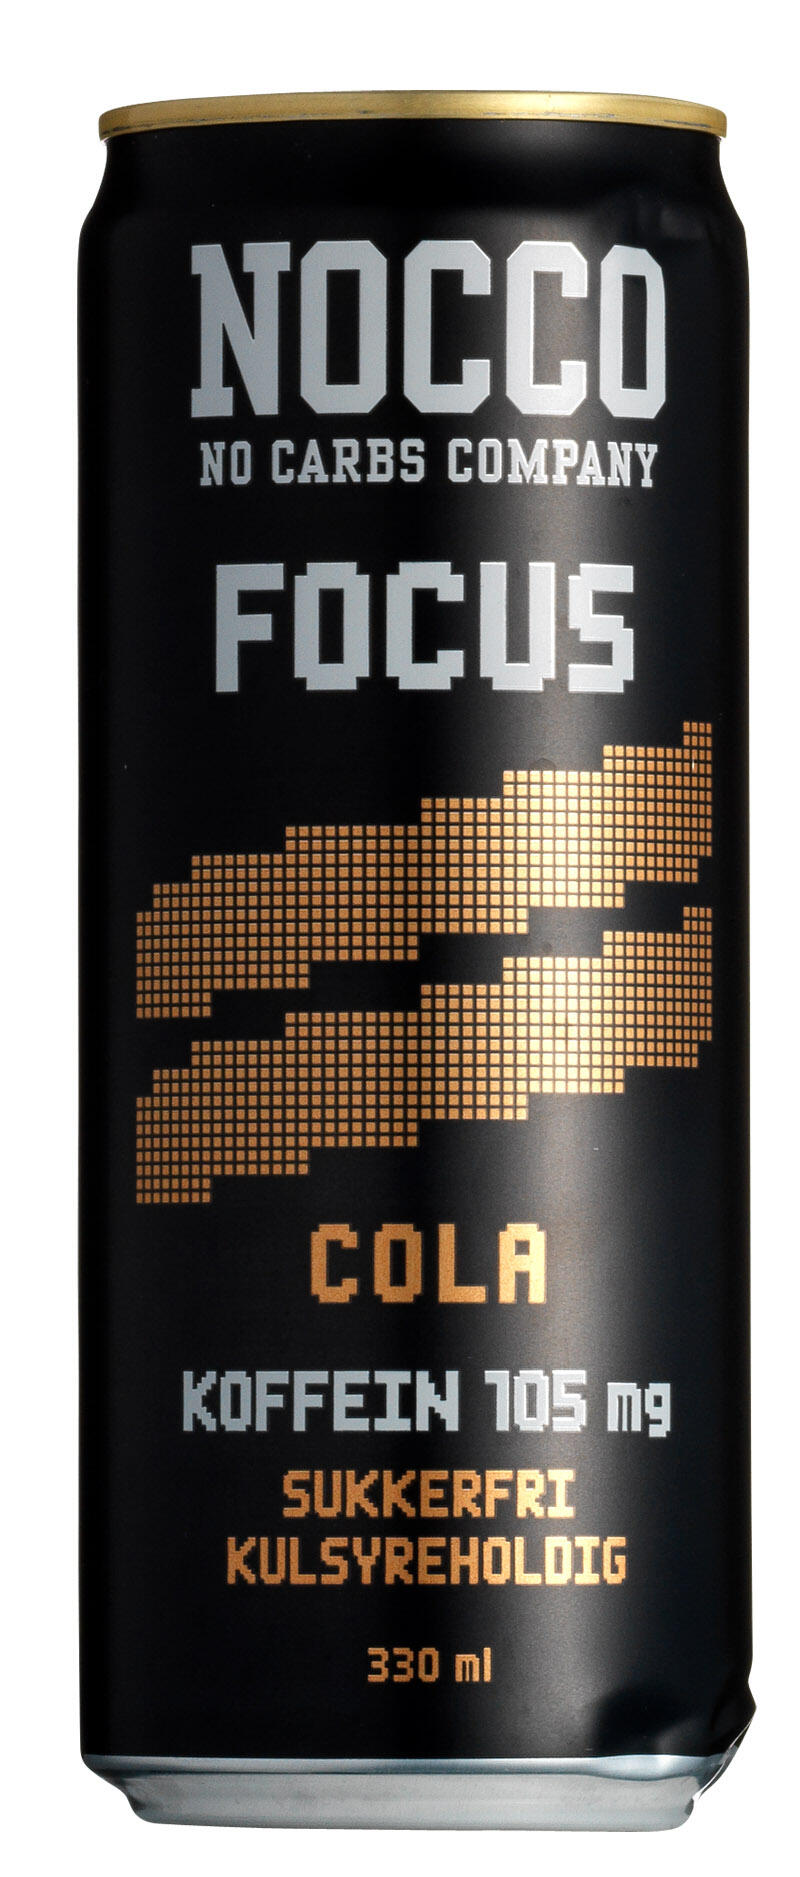 Focus cola Nocco